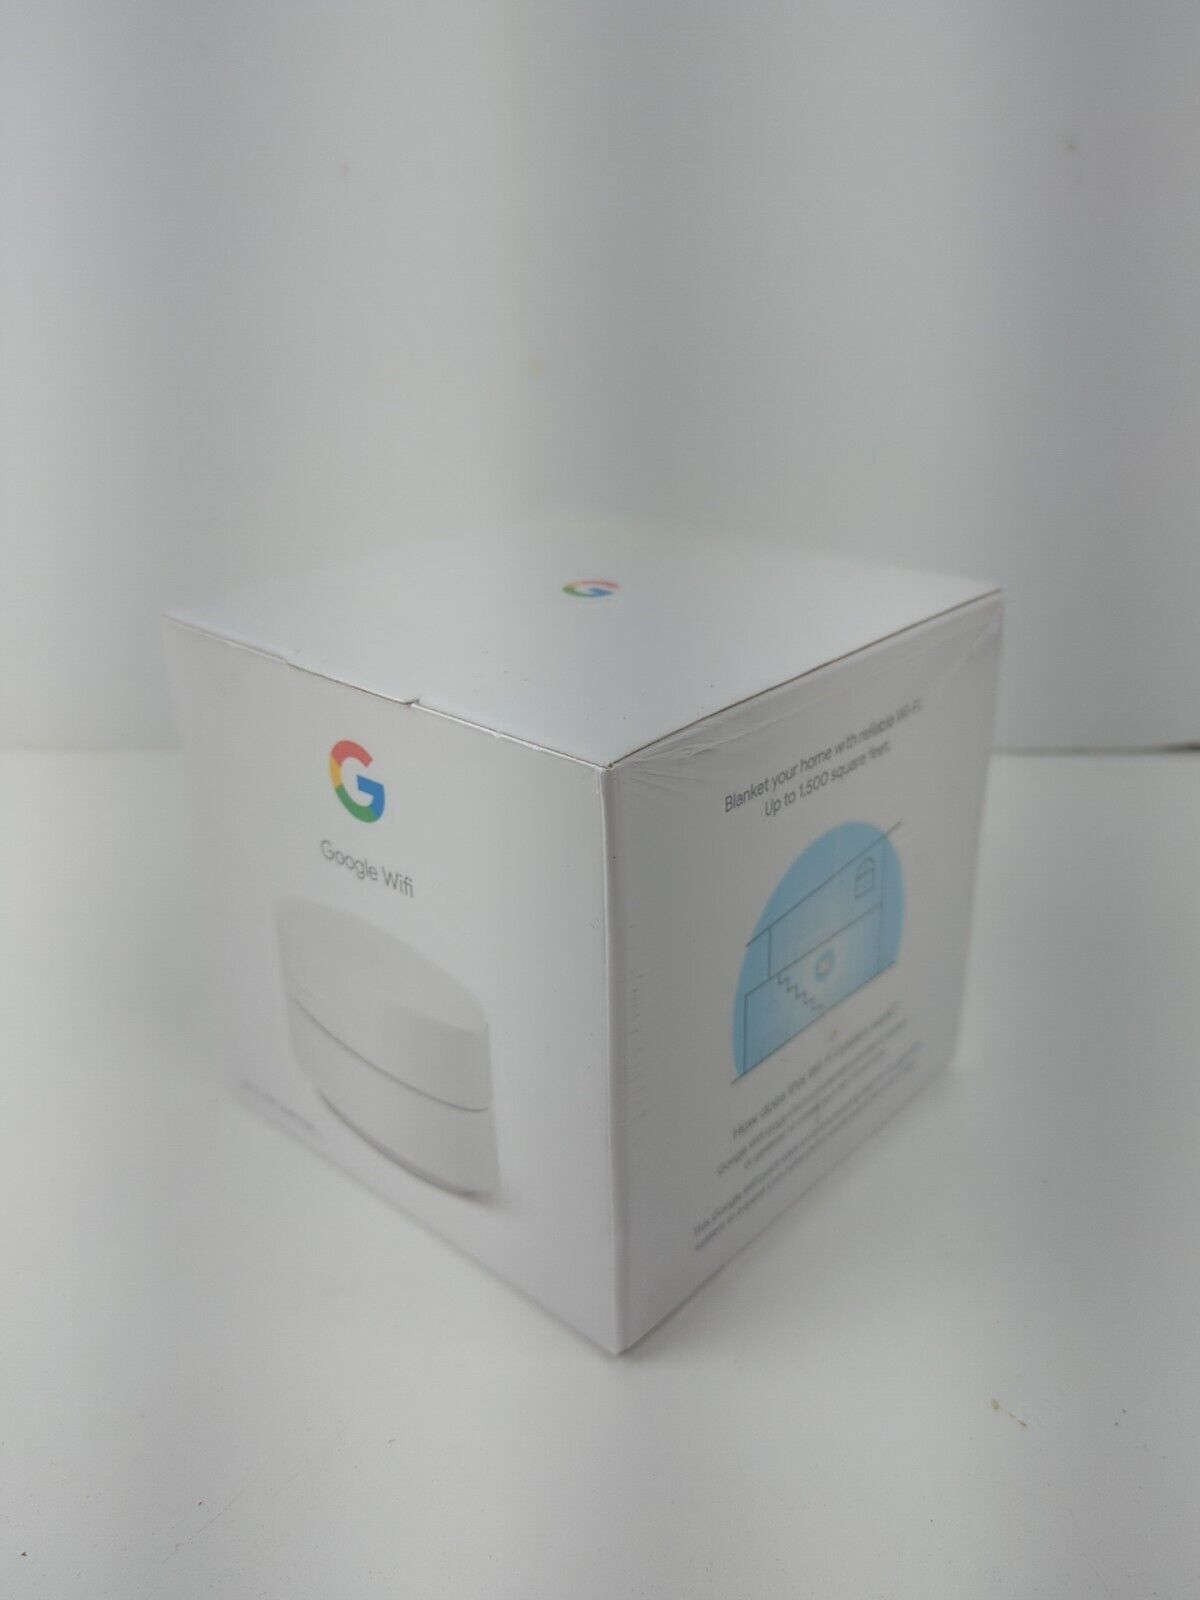 Google Nest AC1200 Dual-Band Wireless Router Wifi - White Snow - GJ2CQ Sealed